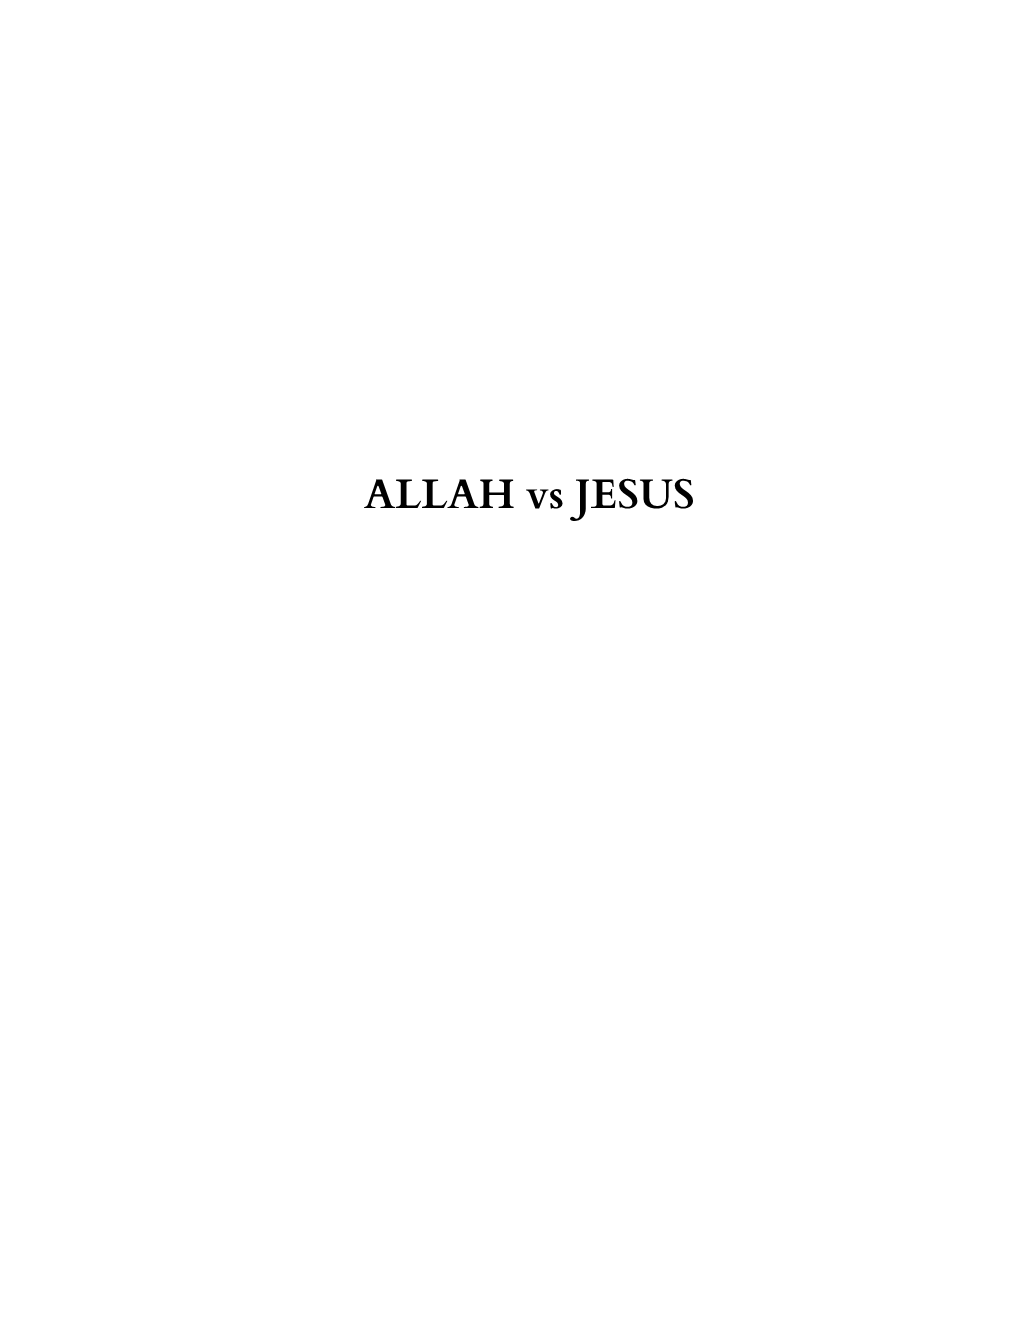 ALLAH Versus JESUS: Who Is the True God?